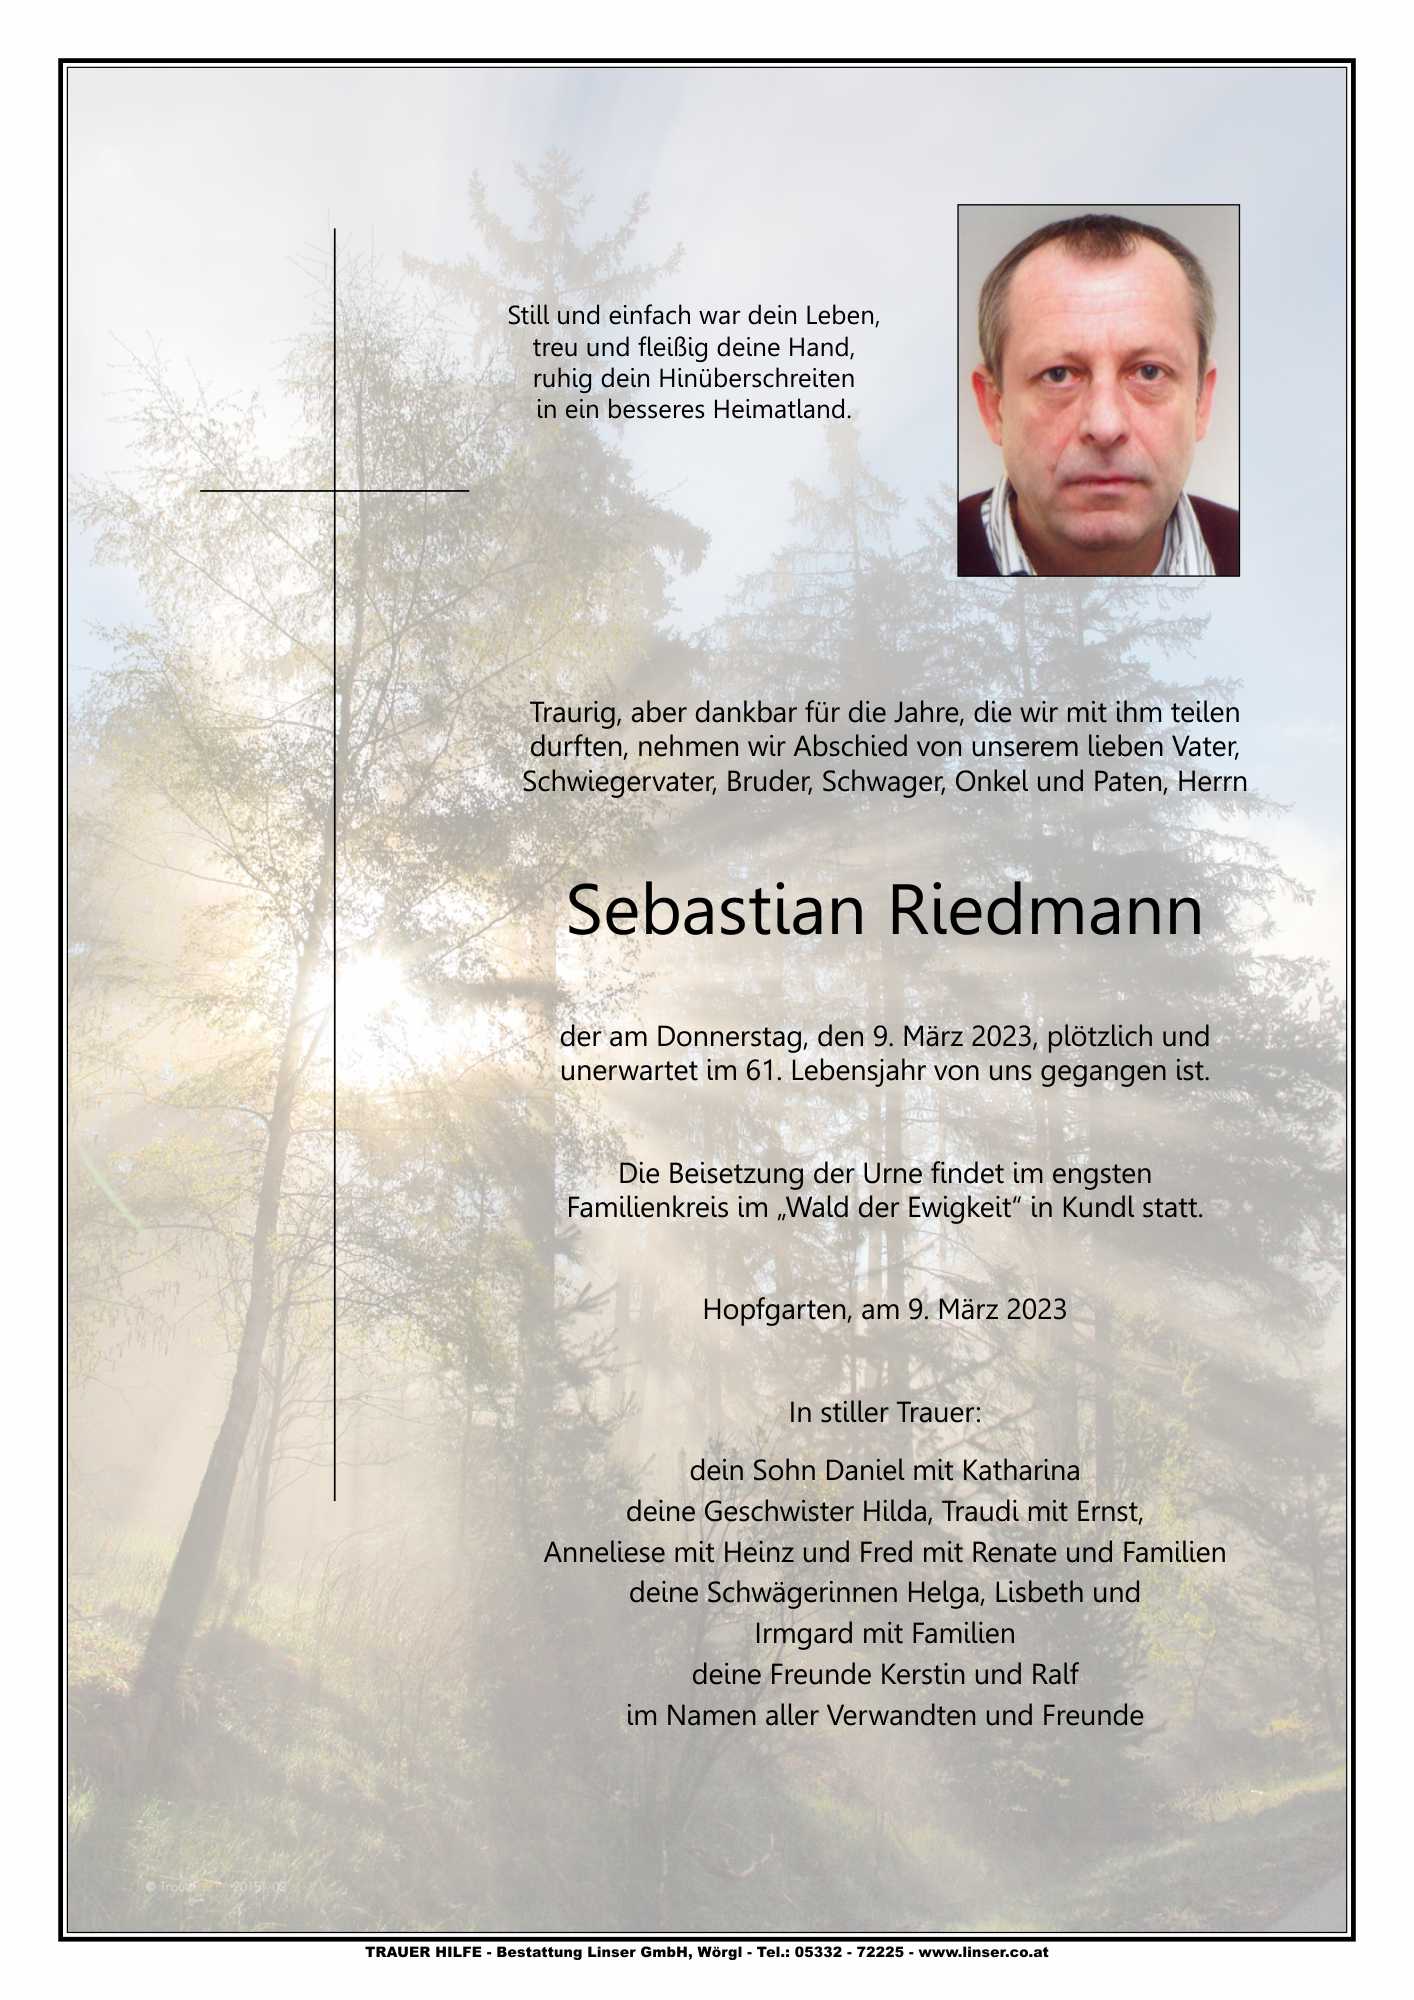 Sebastian Riedmann